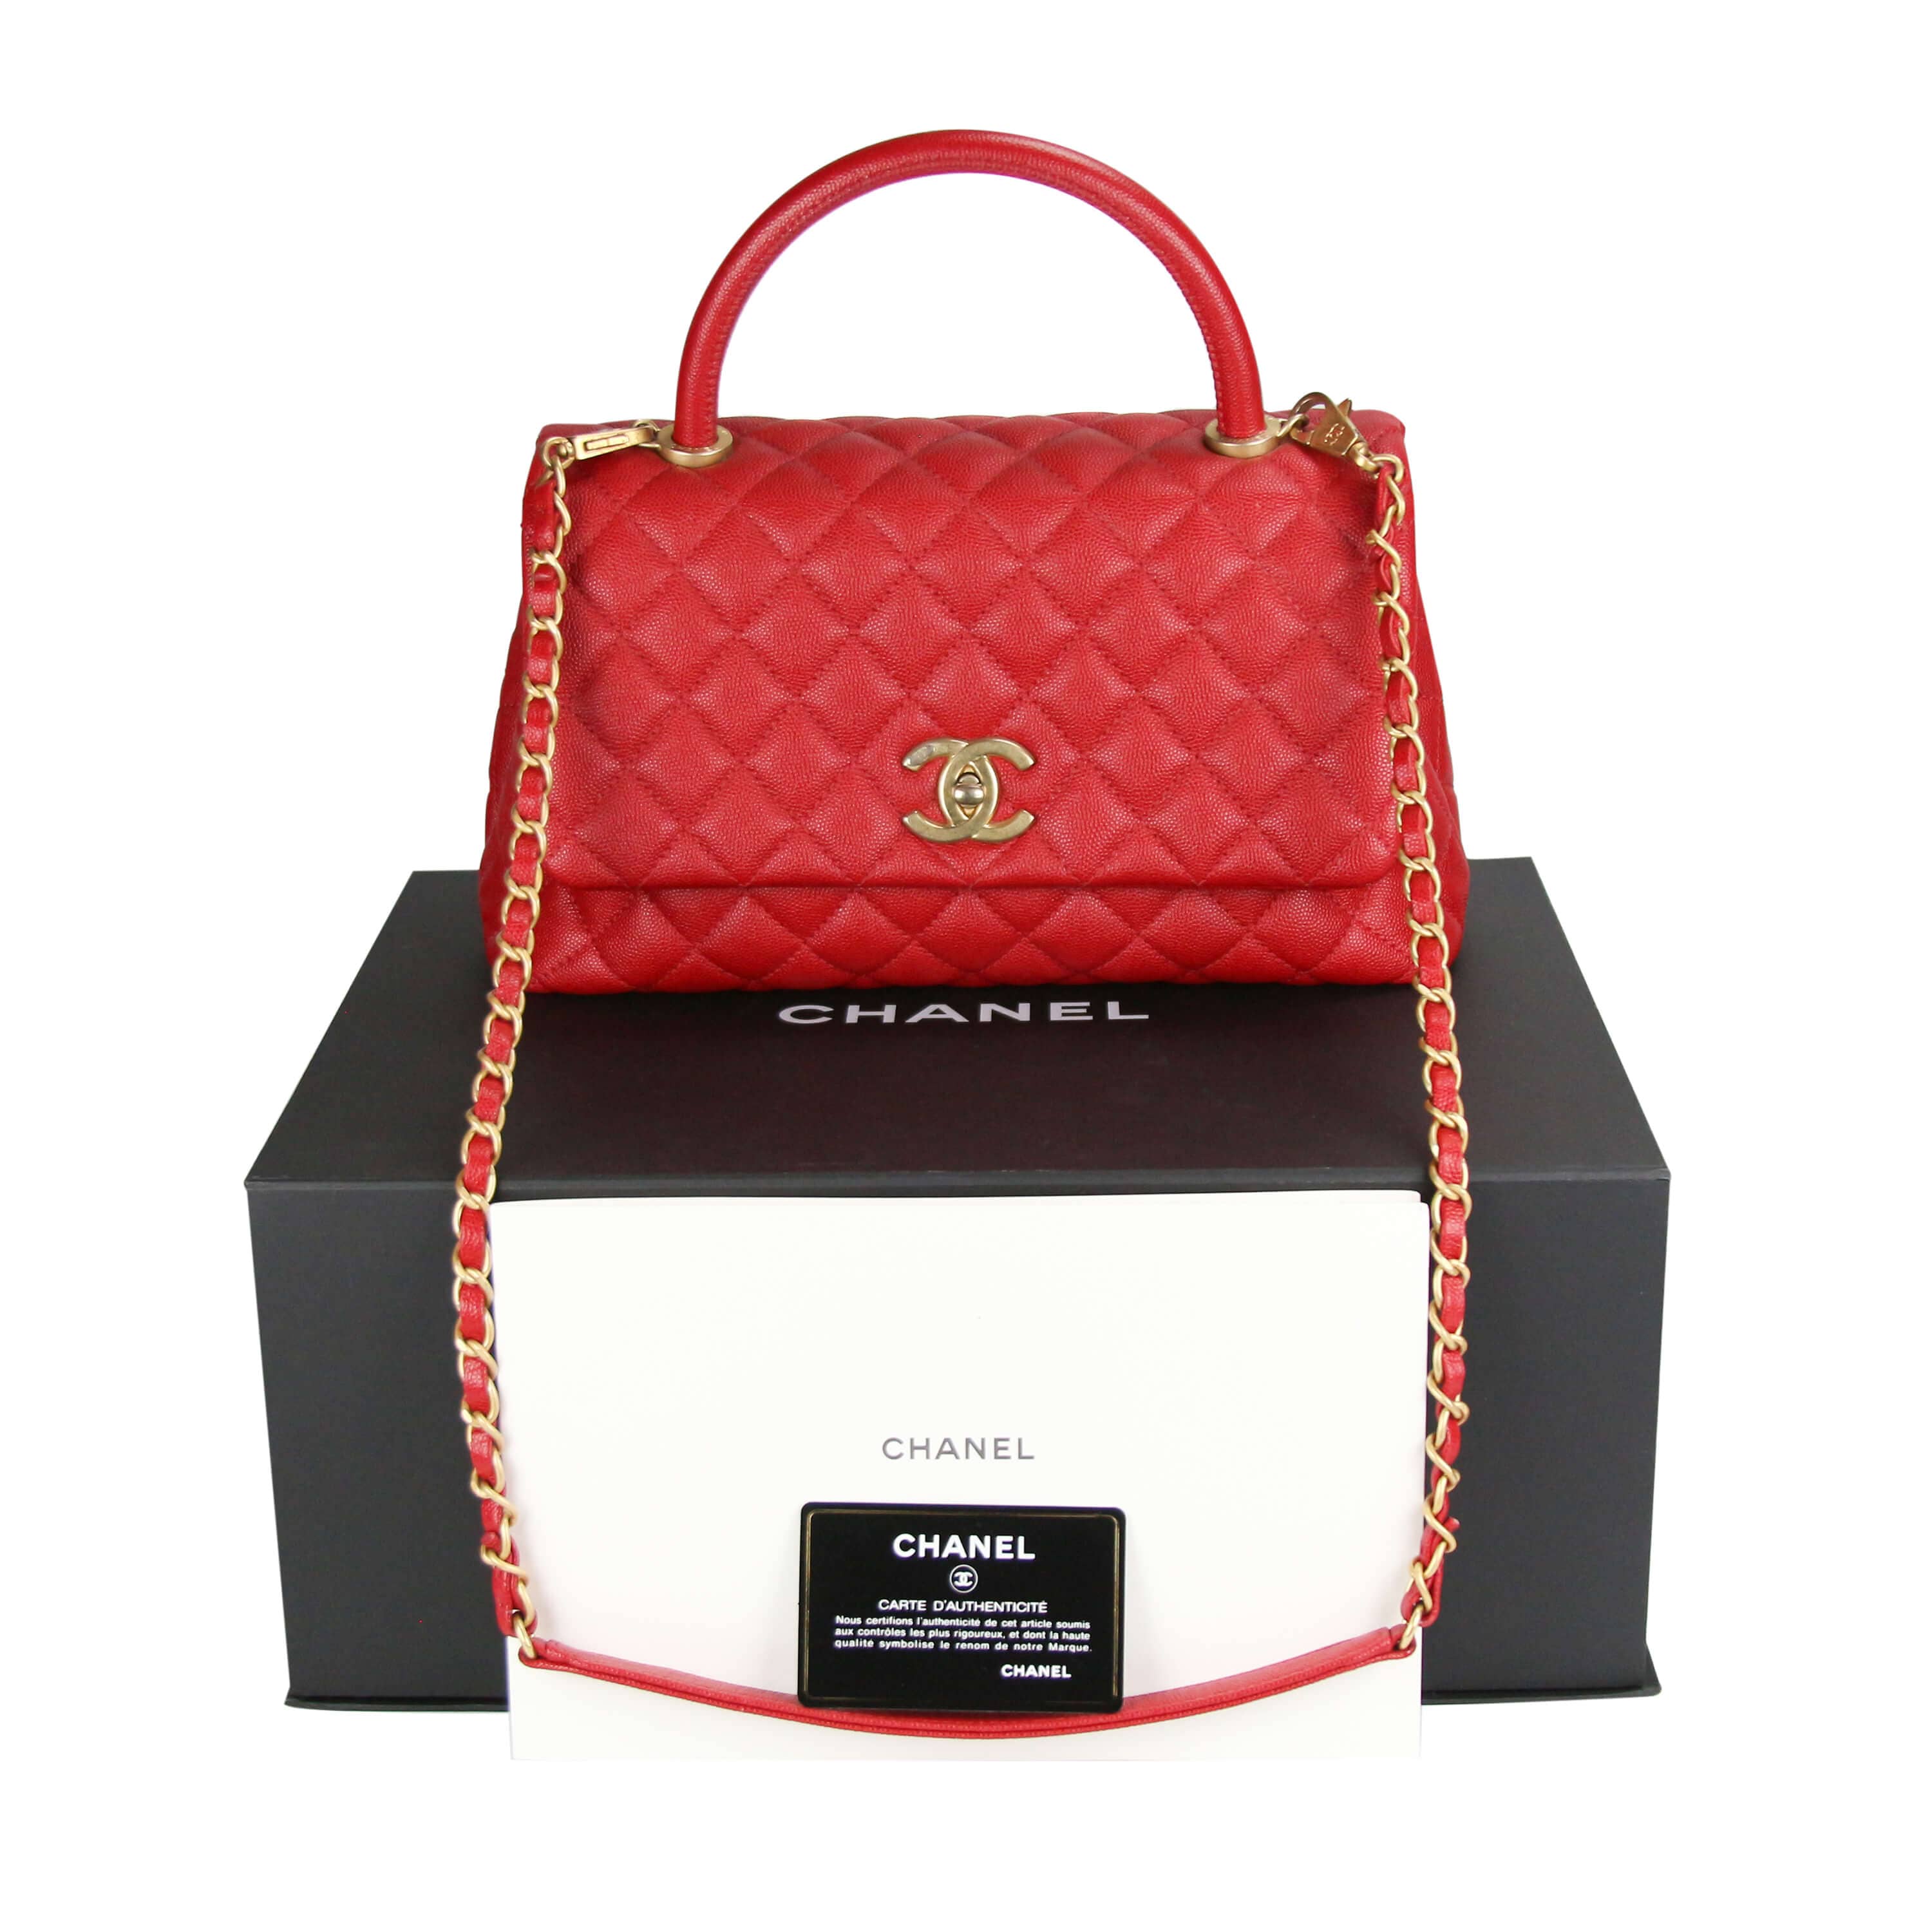 Chanel Coco Poignee Flap Sac Moyen Rouge Caviar Or Vieux 5 0